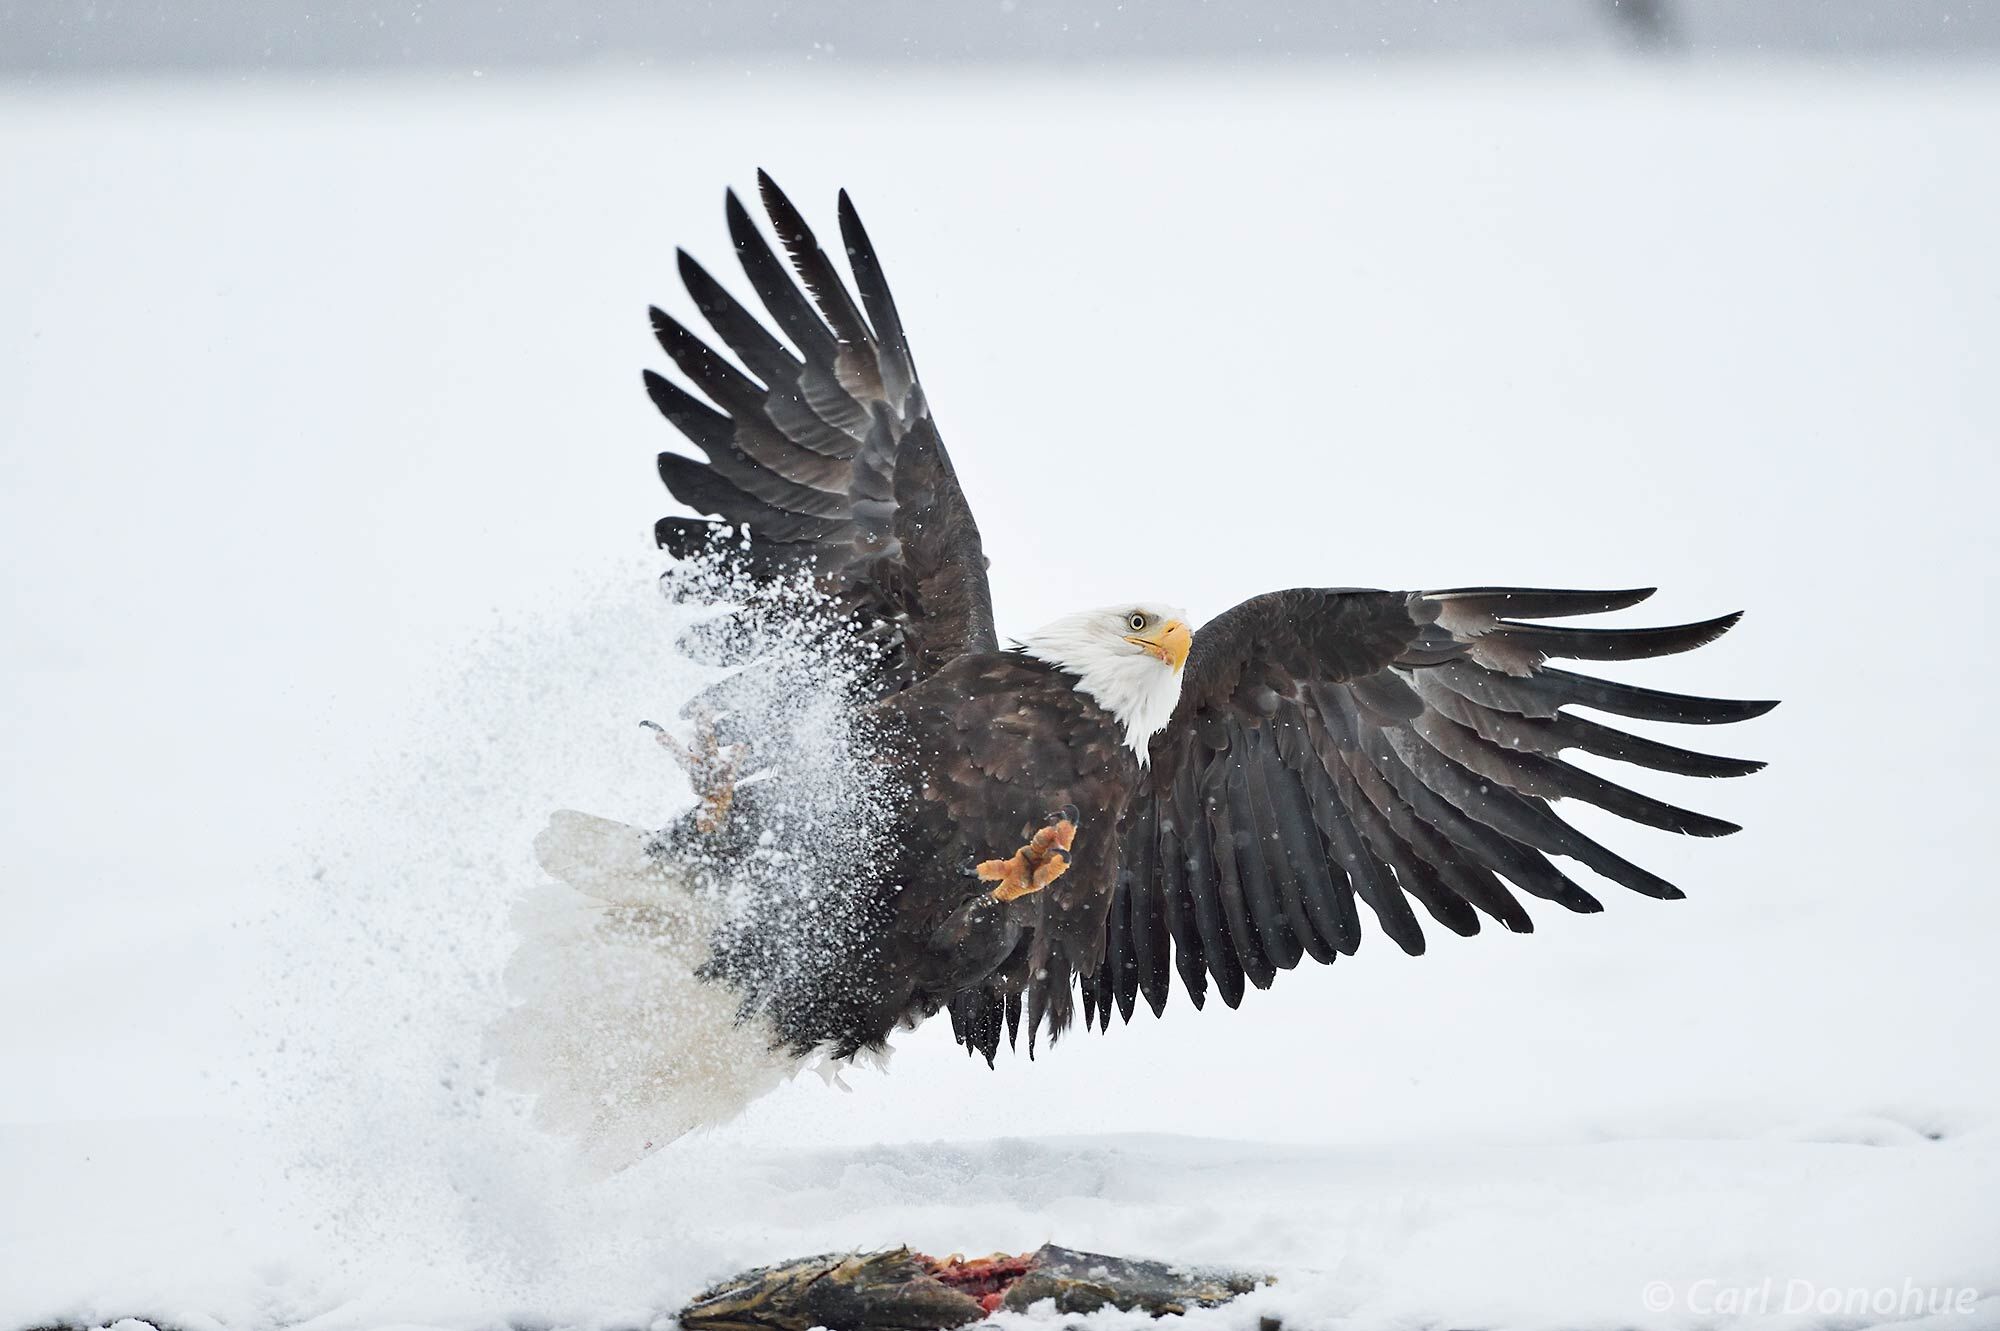 Bald eagle flying in to land in snow, Haines, AK. Haliaeetus leucocephalus photo.